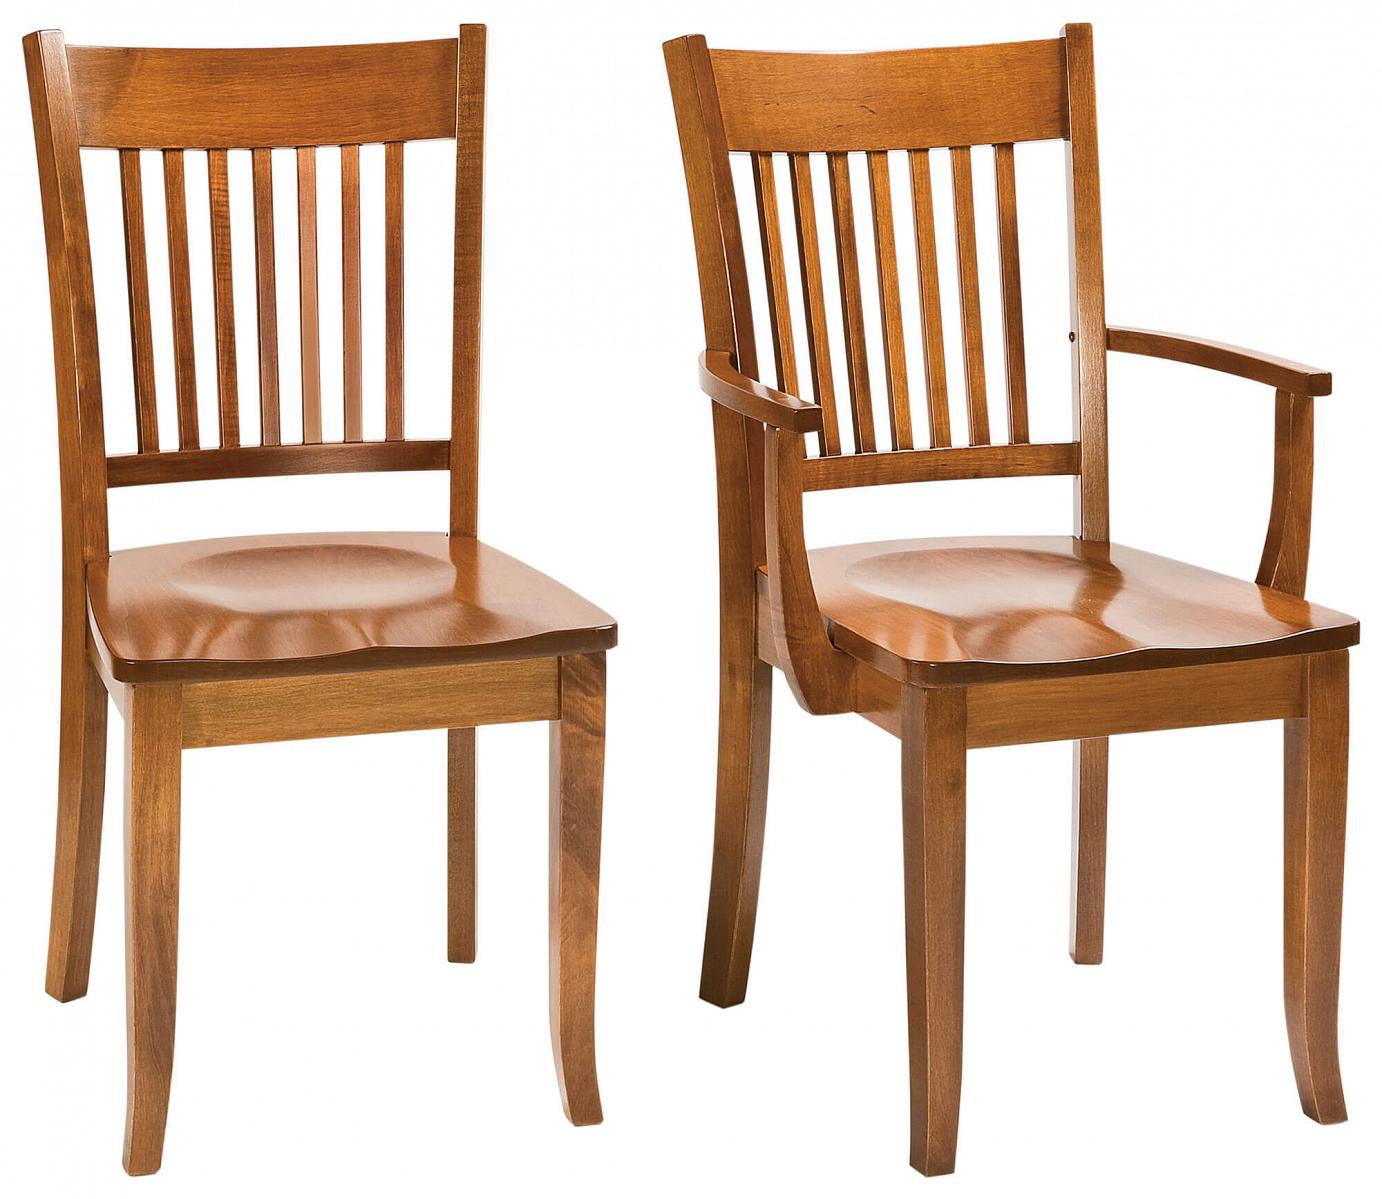 RH Yoder Frankton Chairs